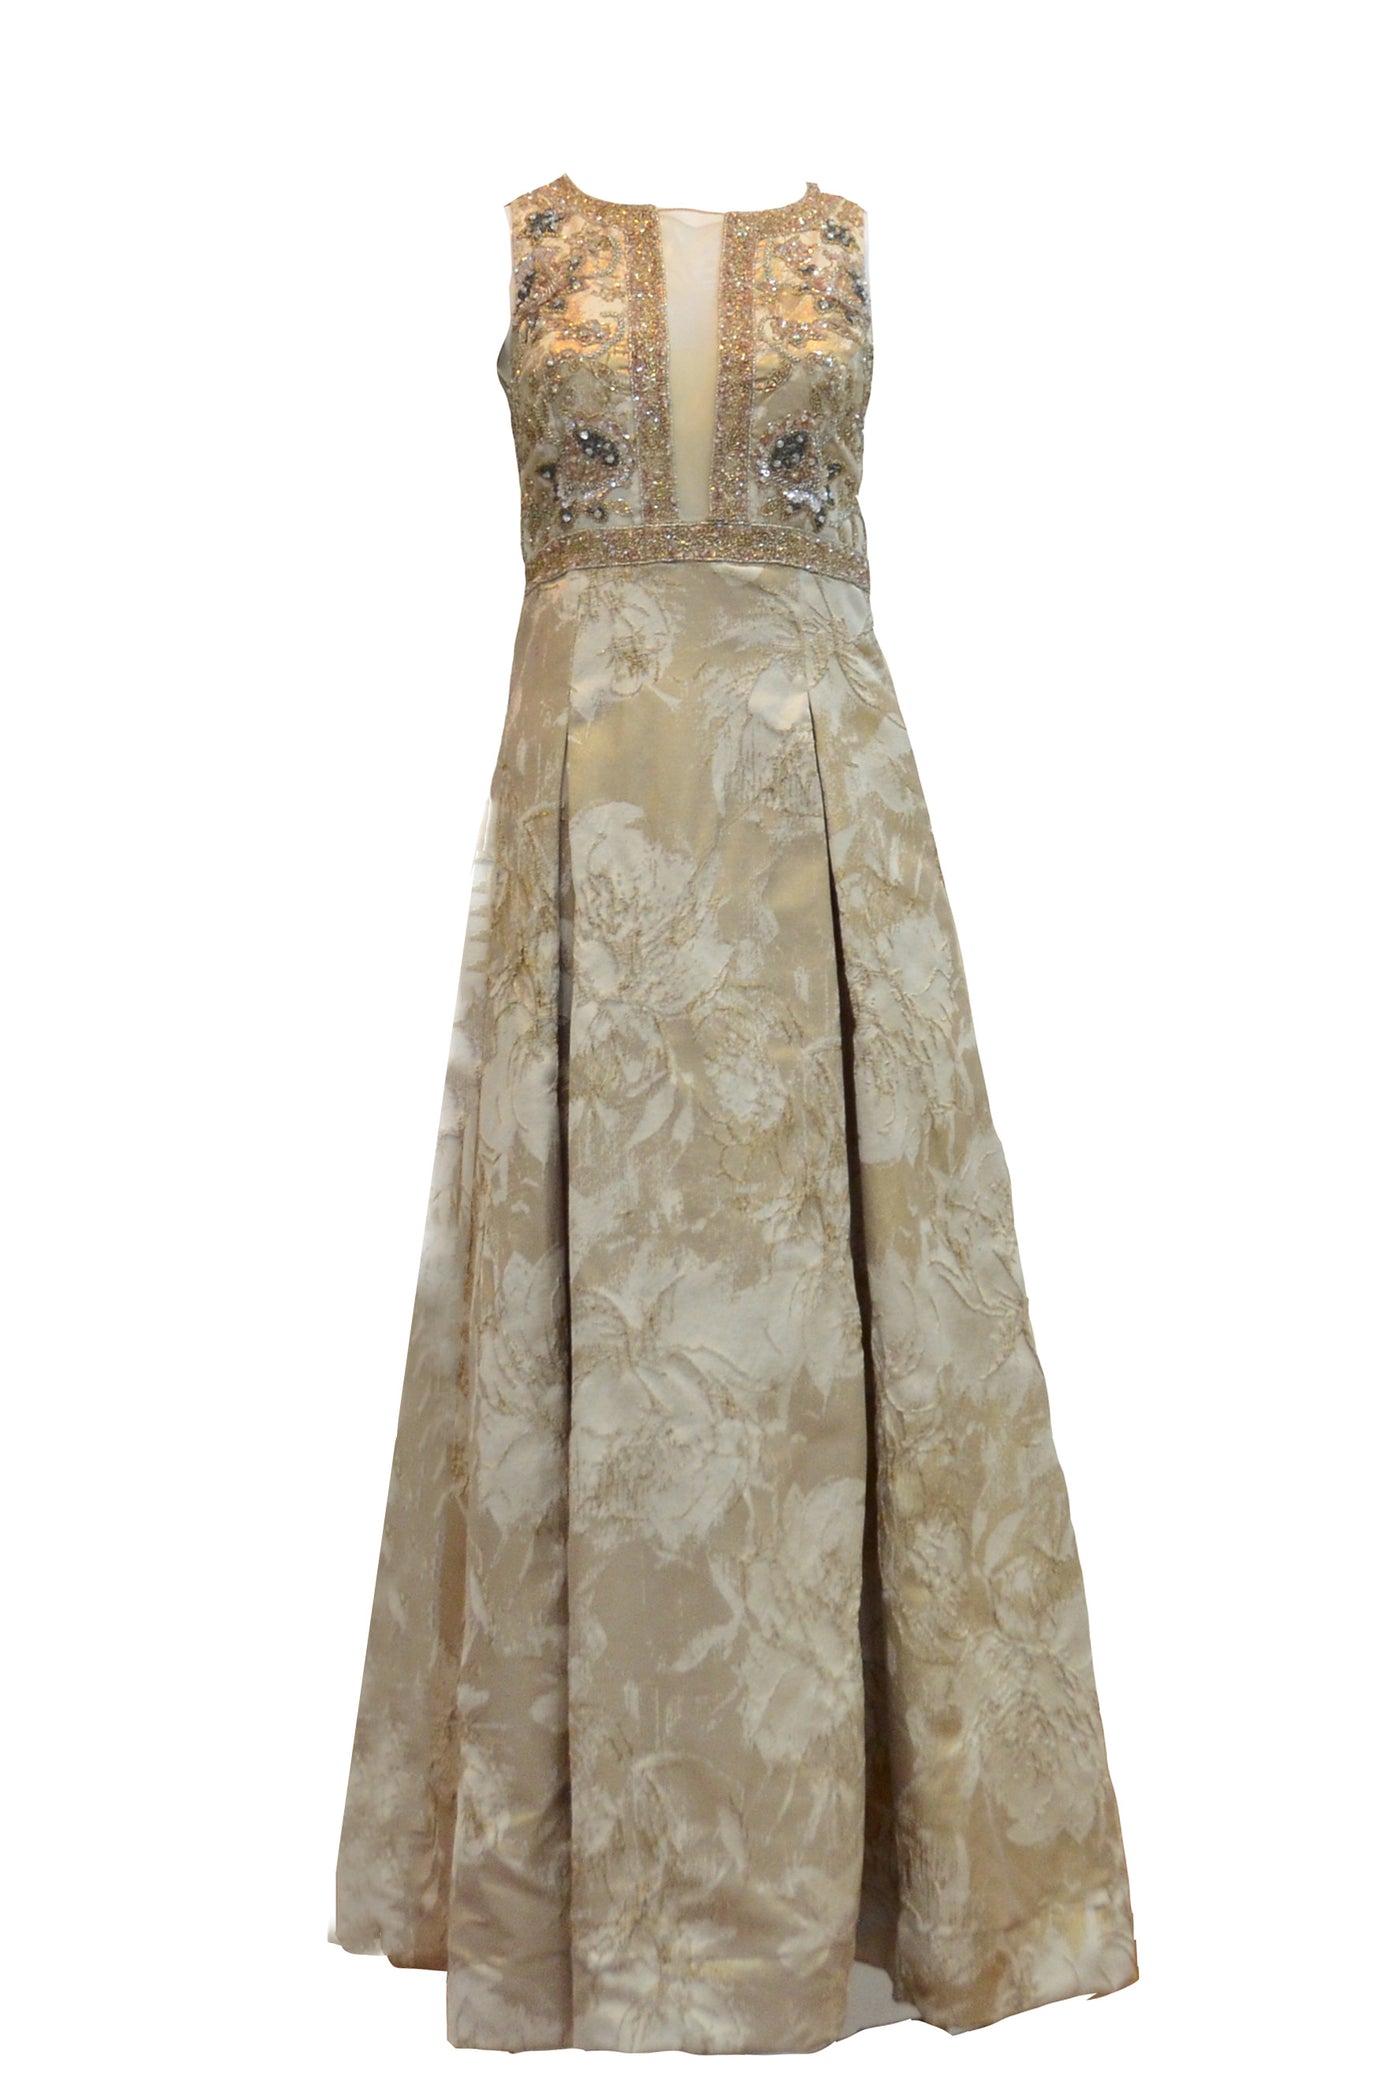 Rent: Aidan Mattox - Cream Gold Jacquard Beaded Gown